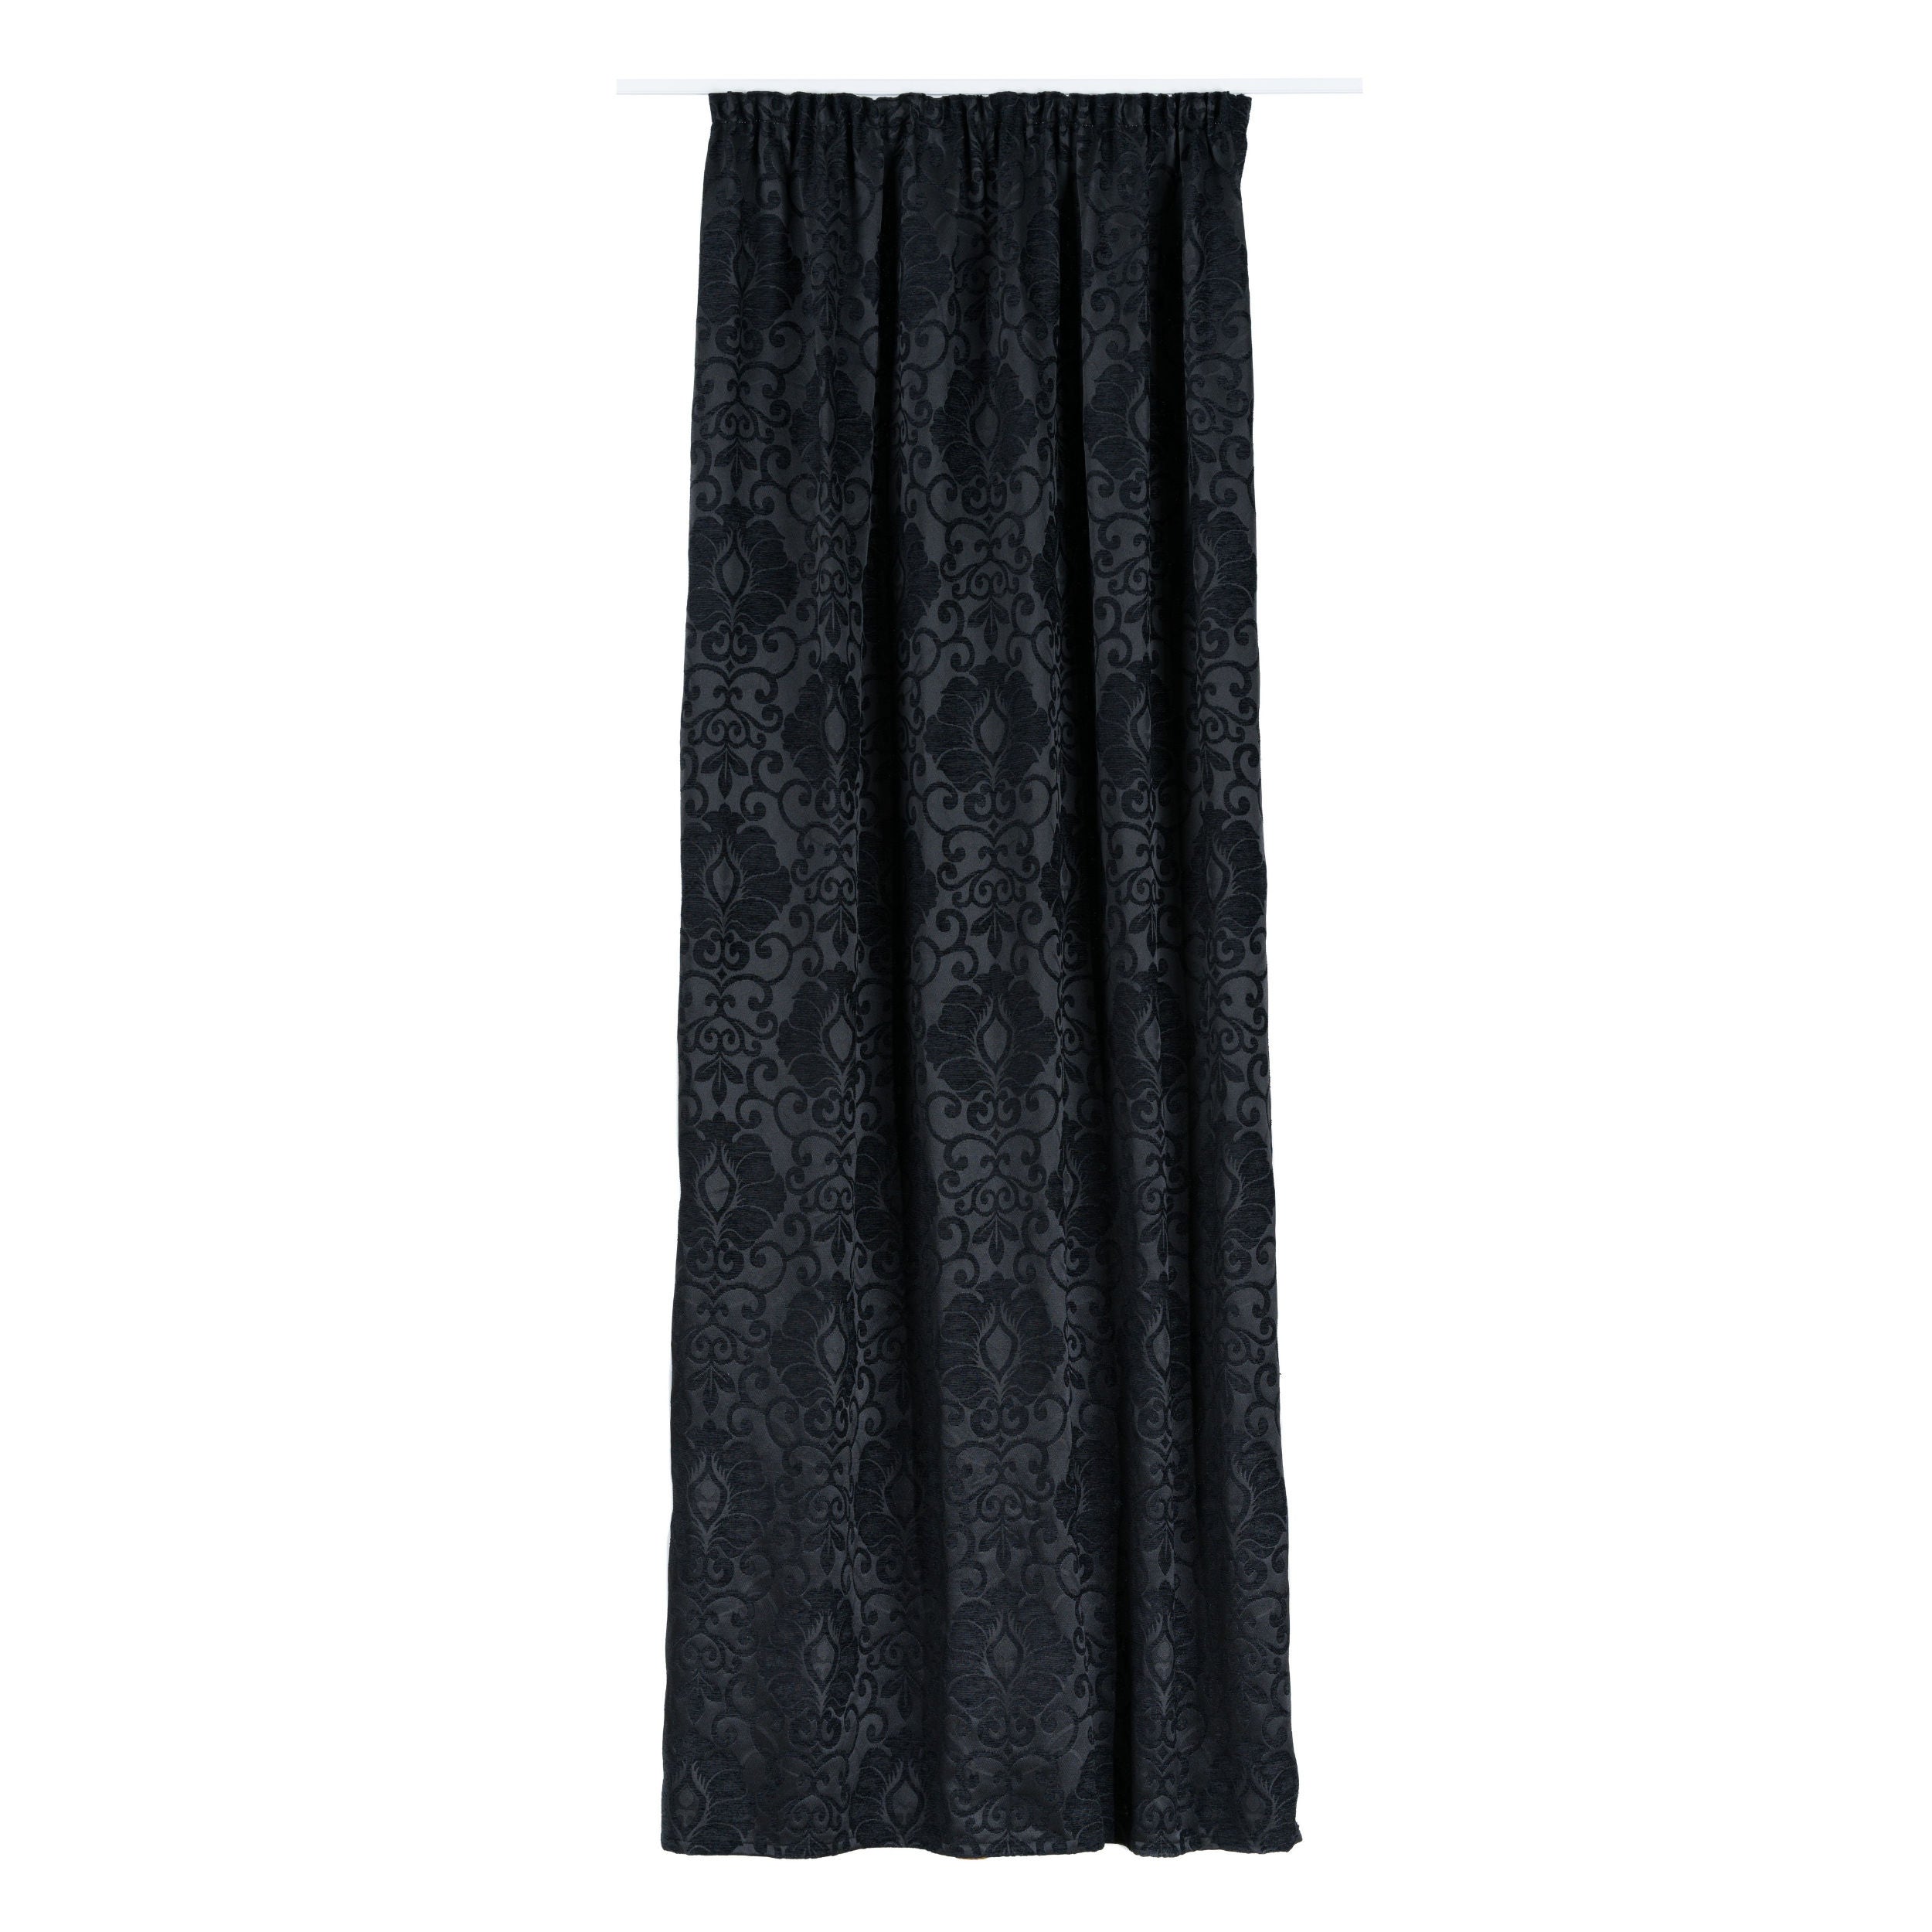 Draperie Mendola Fabrics, model Richard, Quadra, chenille, negru, opac, 300 cm